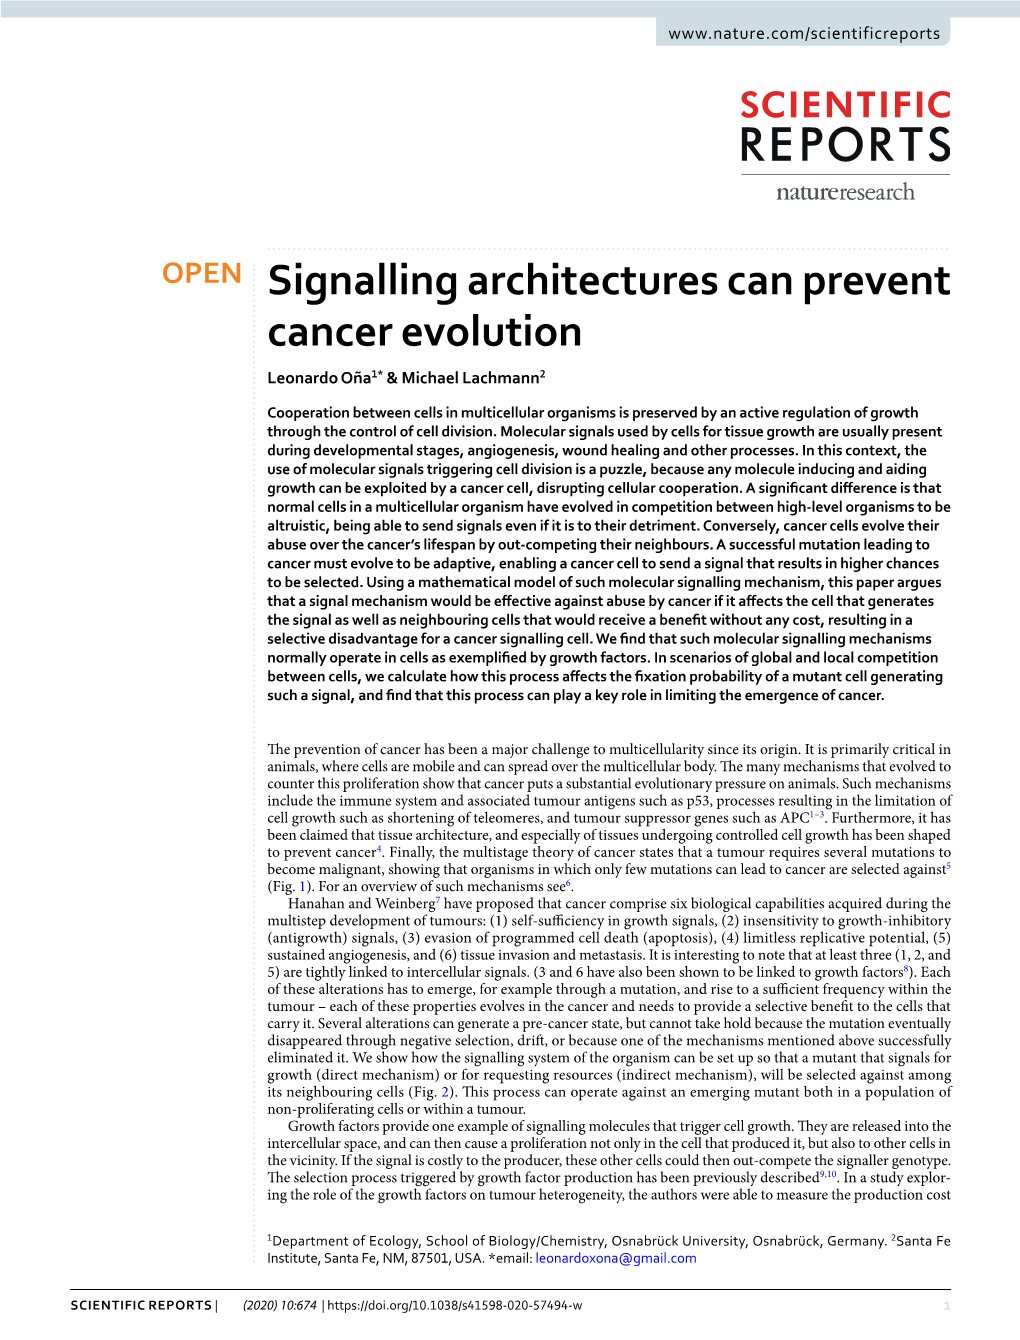 Signalling Architectures Can Prevent Cancer Evolution Leonardo Oña1* & Michael Lachmann2